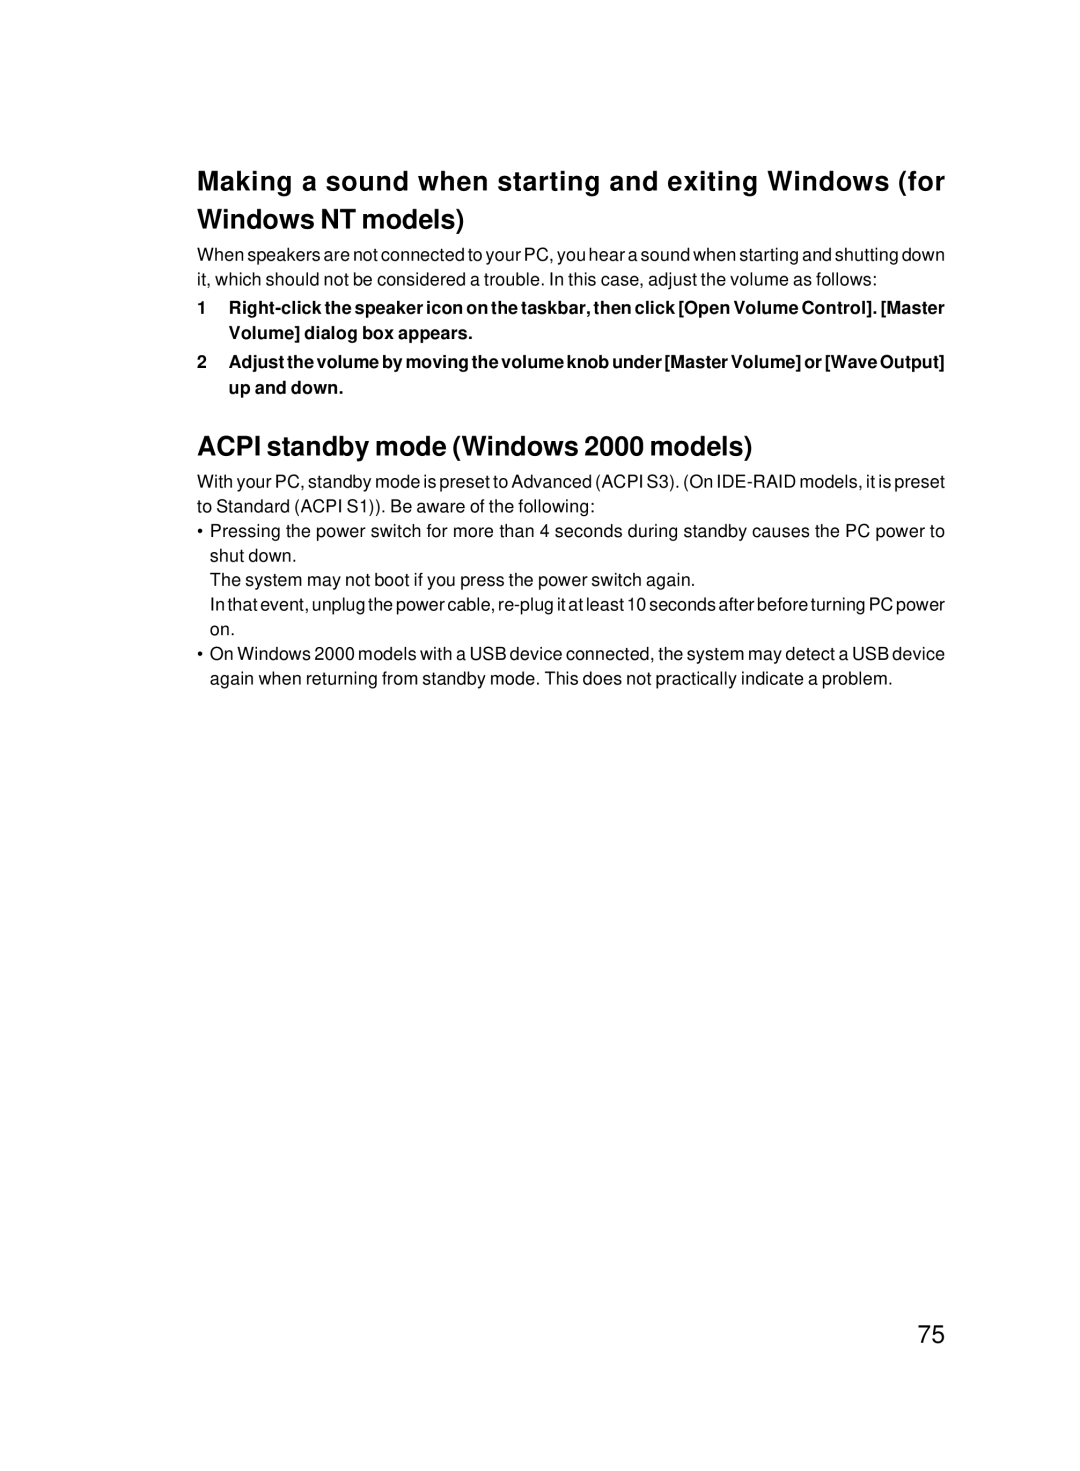 Fujitsu 8000 SERIES user manual Acpi standby mode Windows 2000 models 